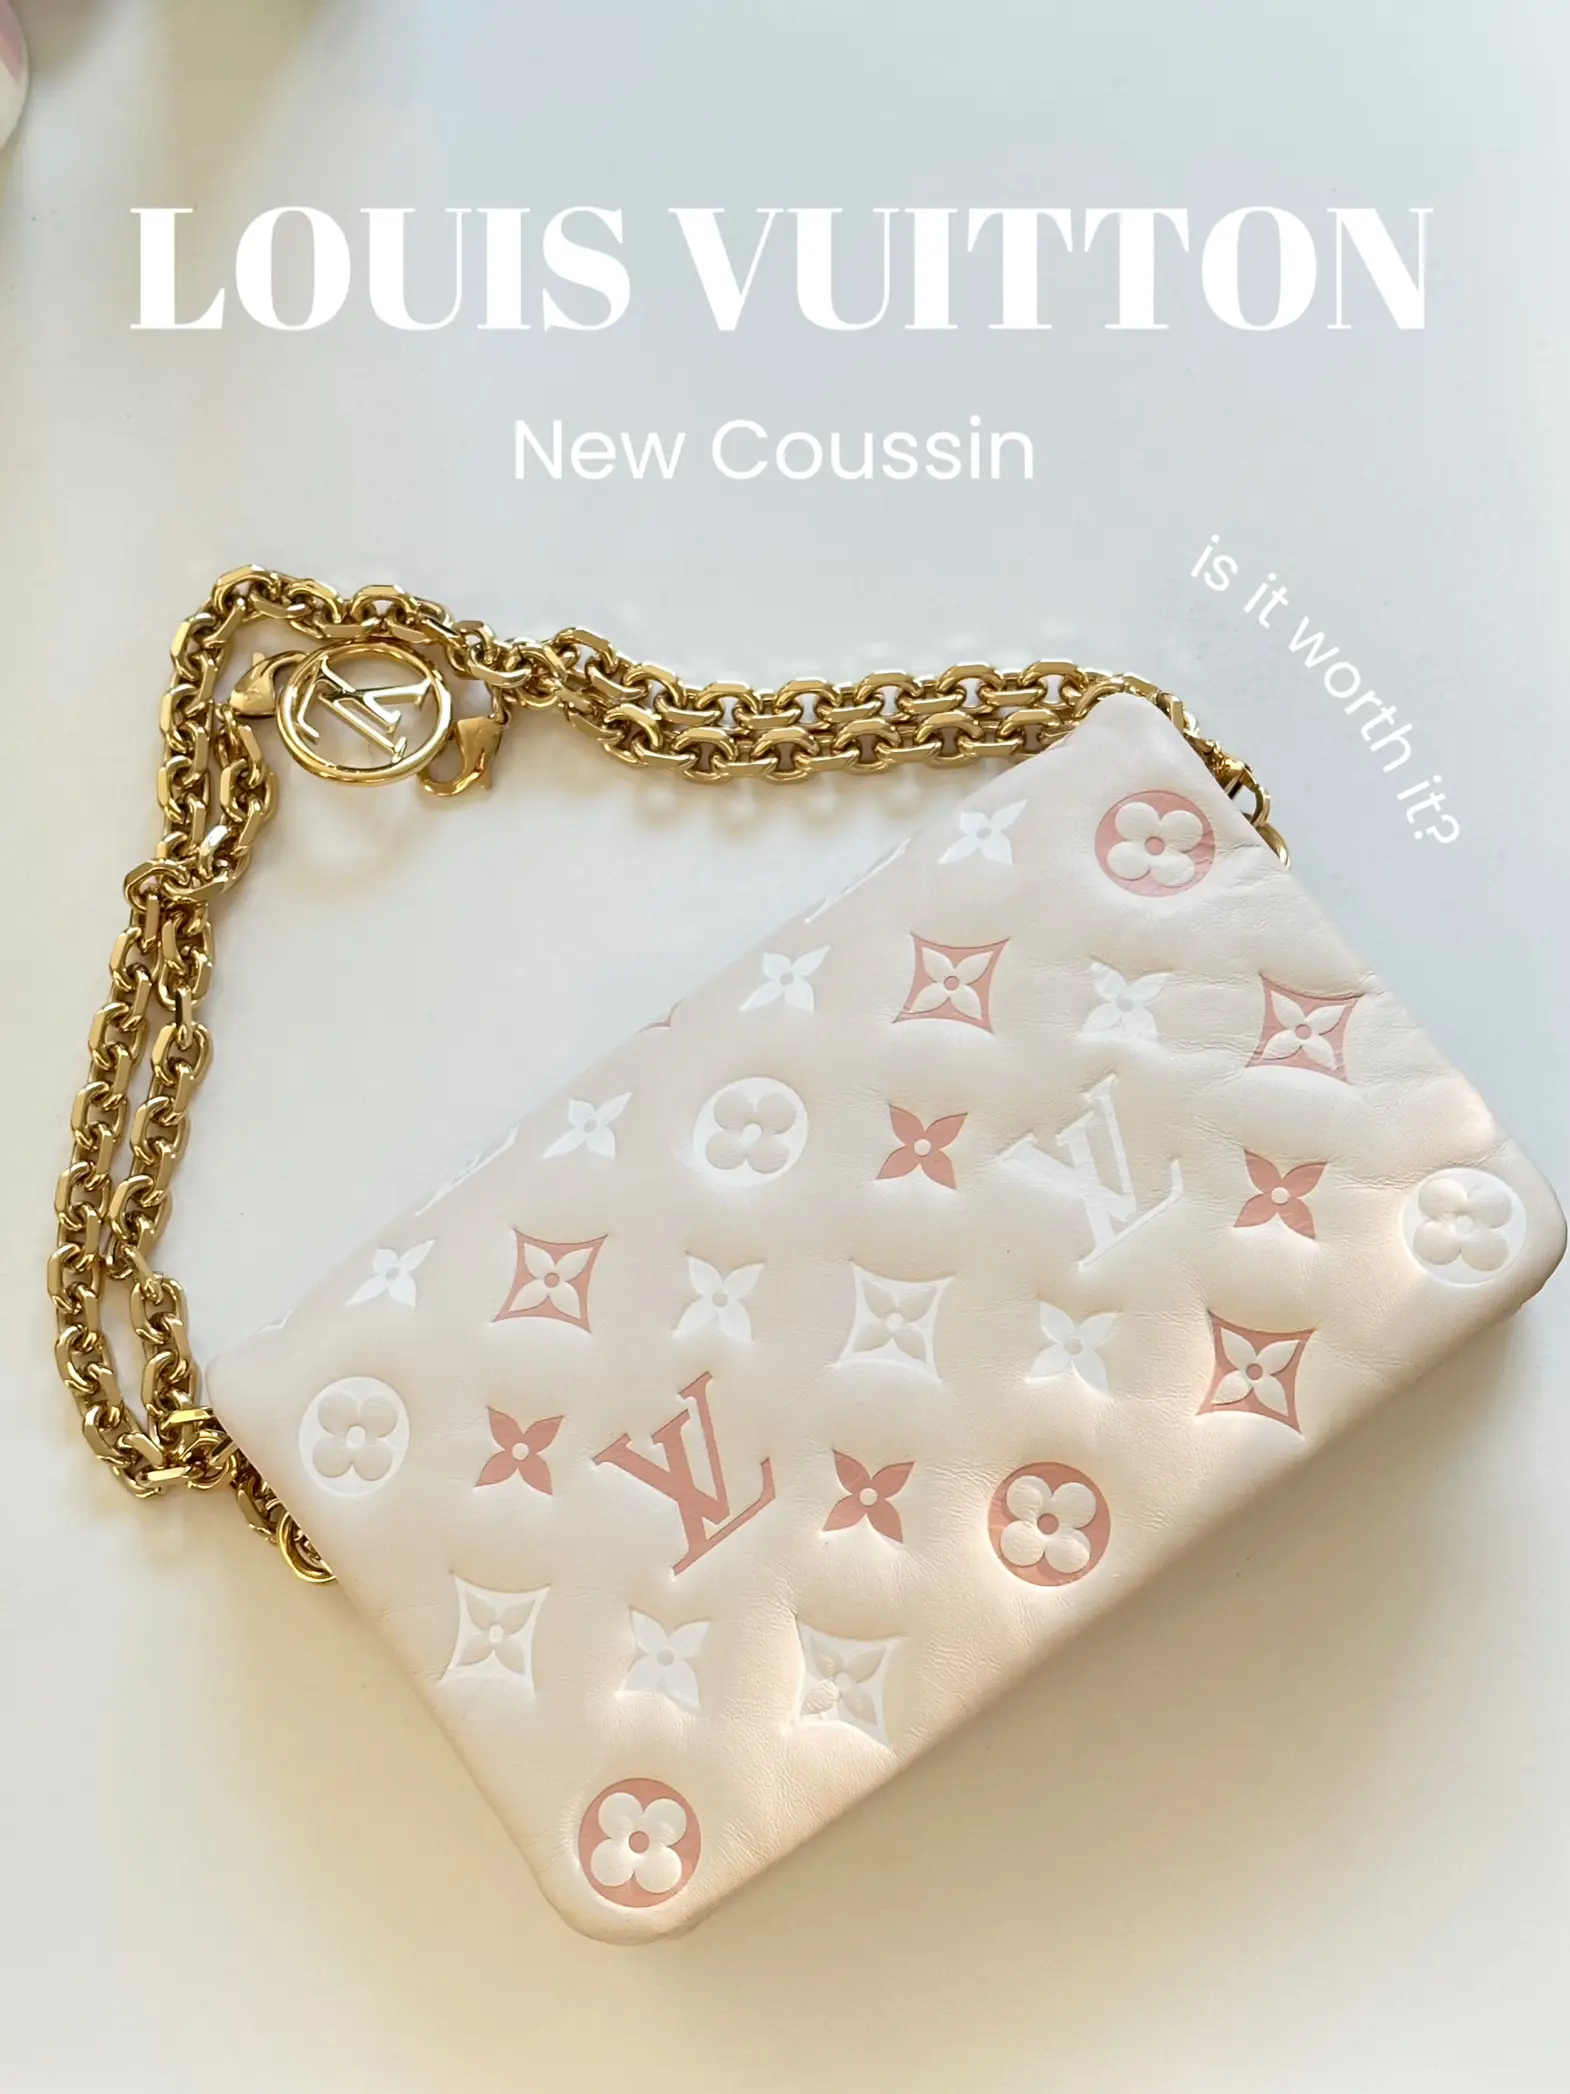 THE NEW LOUIS VUITTON COUSSIN BAG REVIEW & DETAILS - LV COUSSIN PM